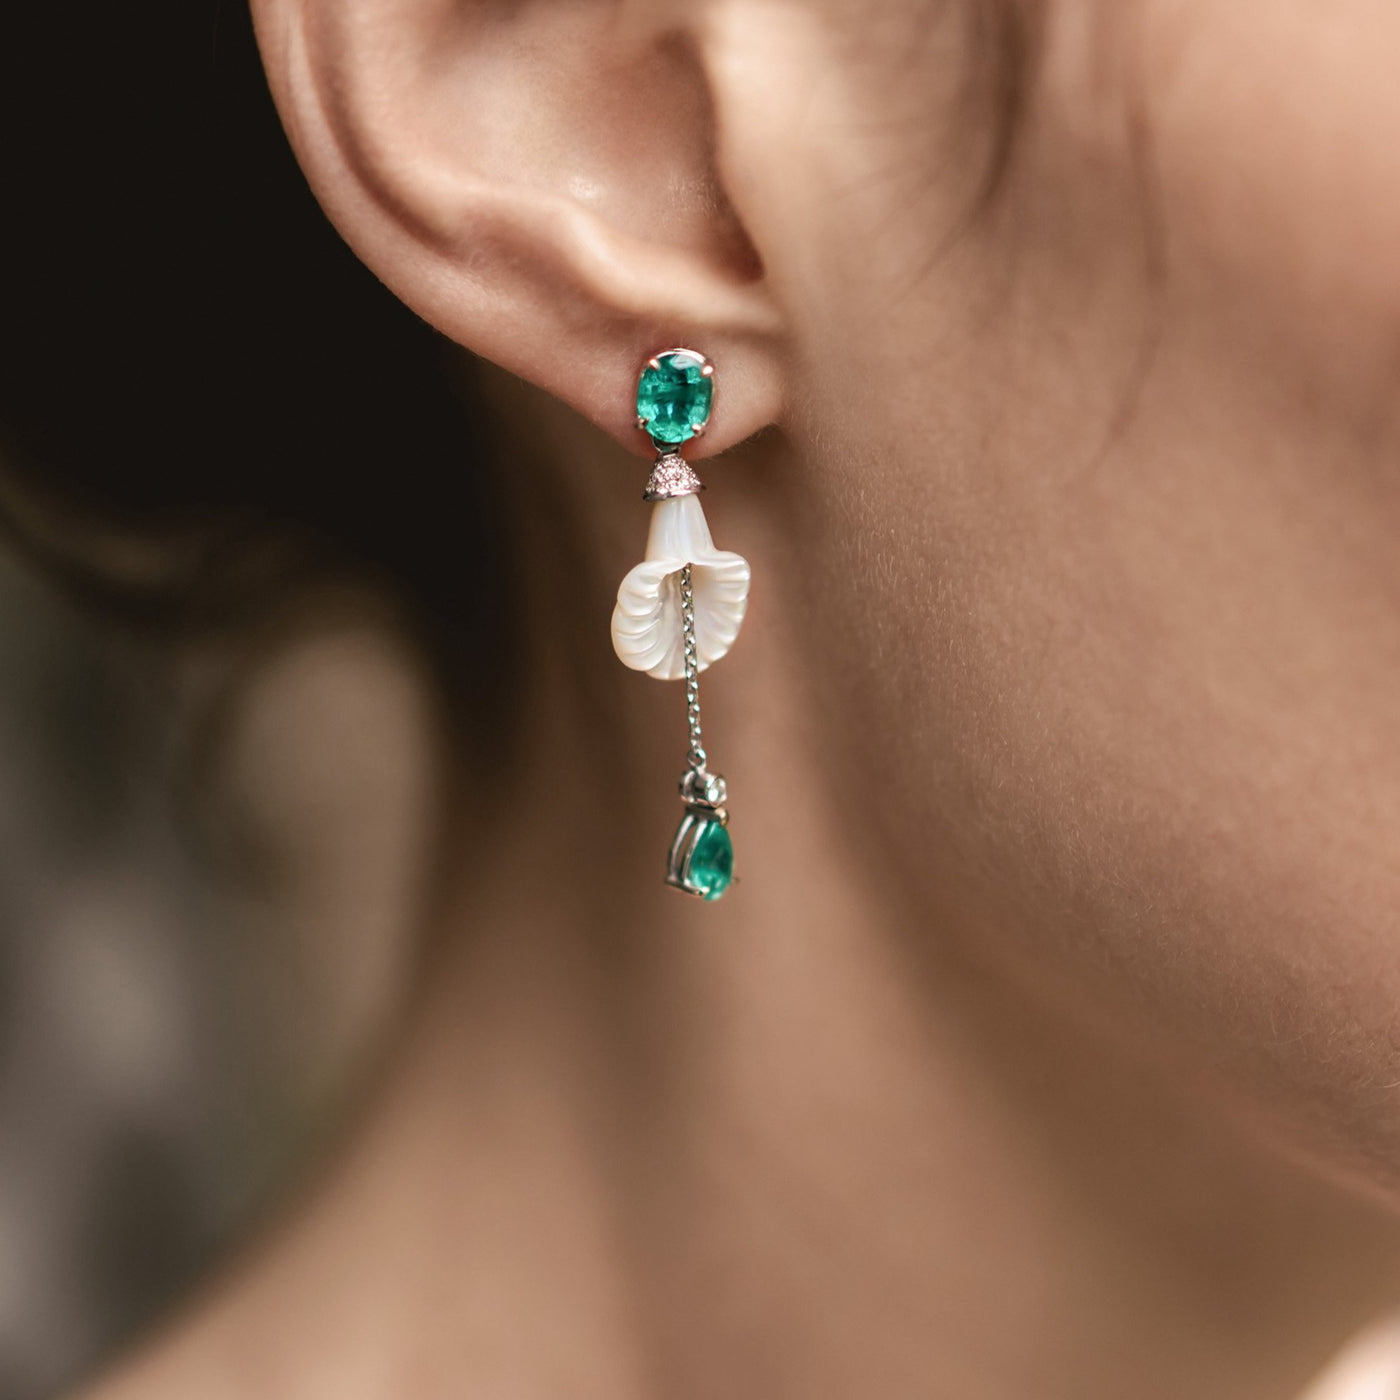 Ghislaine earrings